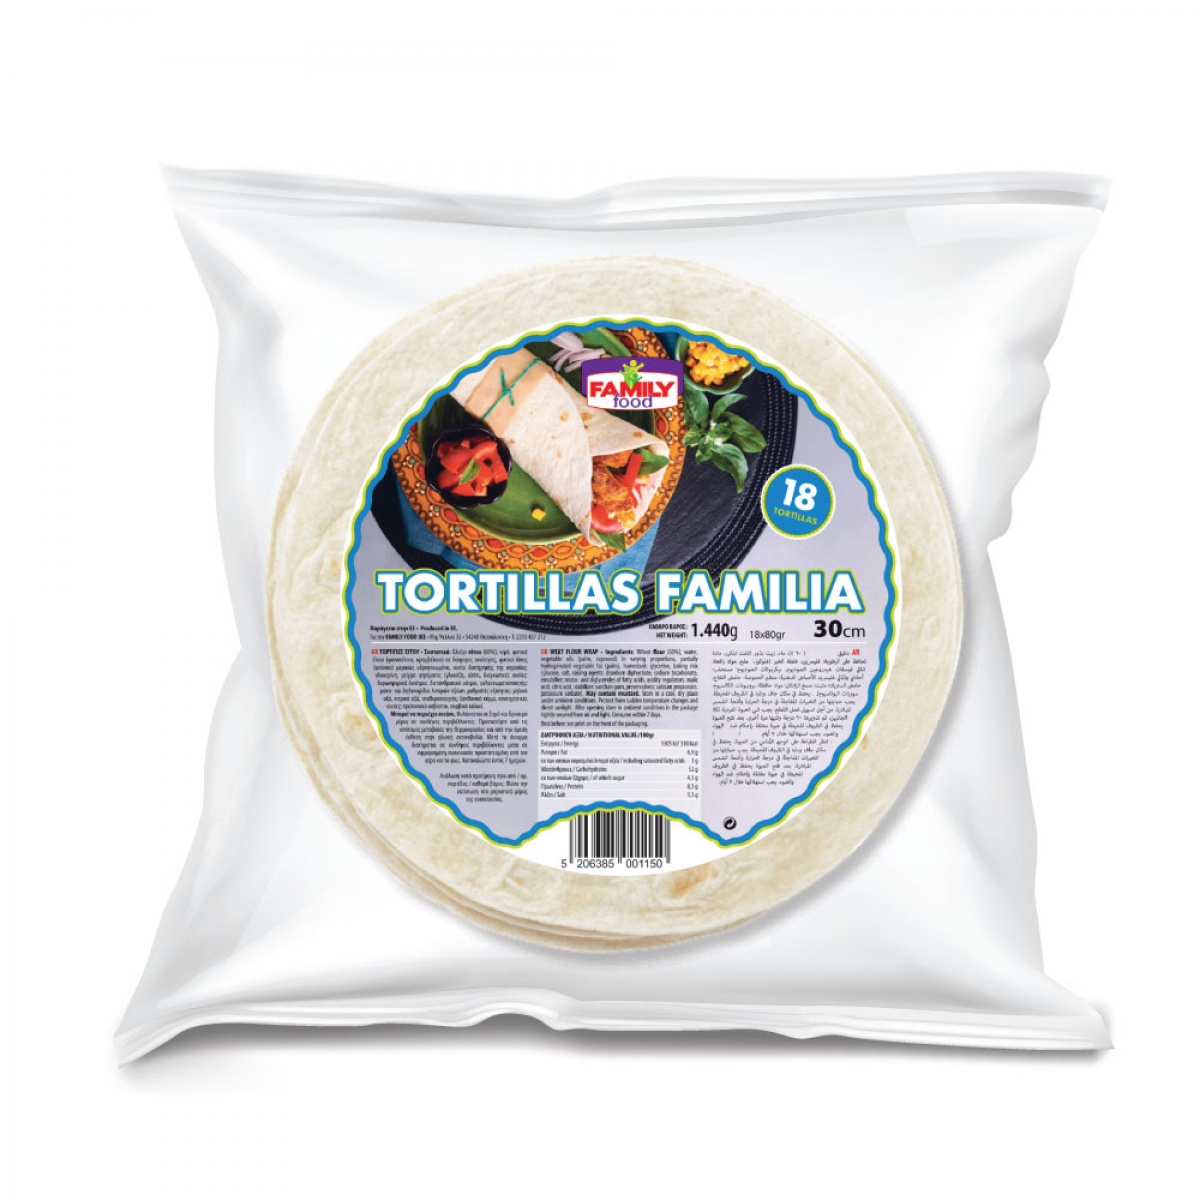 TORTILLAS "FAMILIA" (6 x 18τμχ) 30cm 80gr